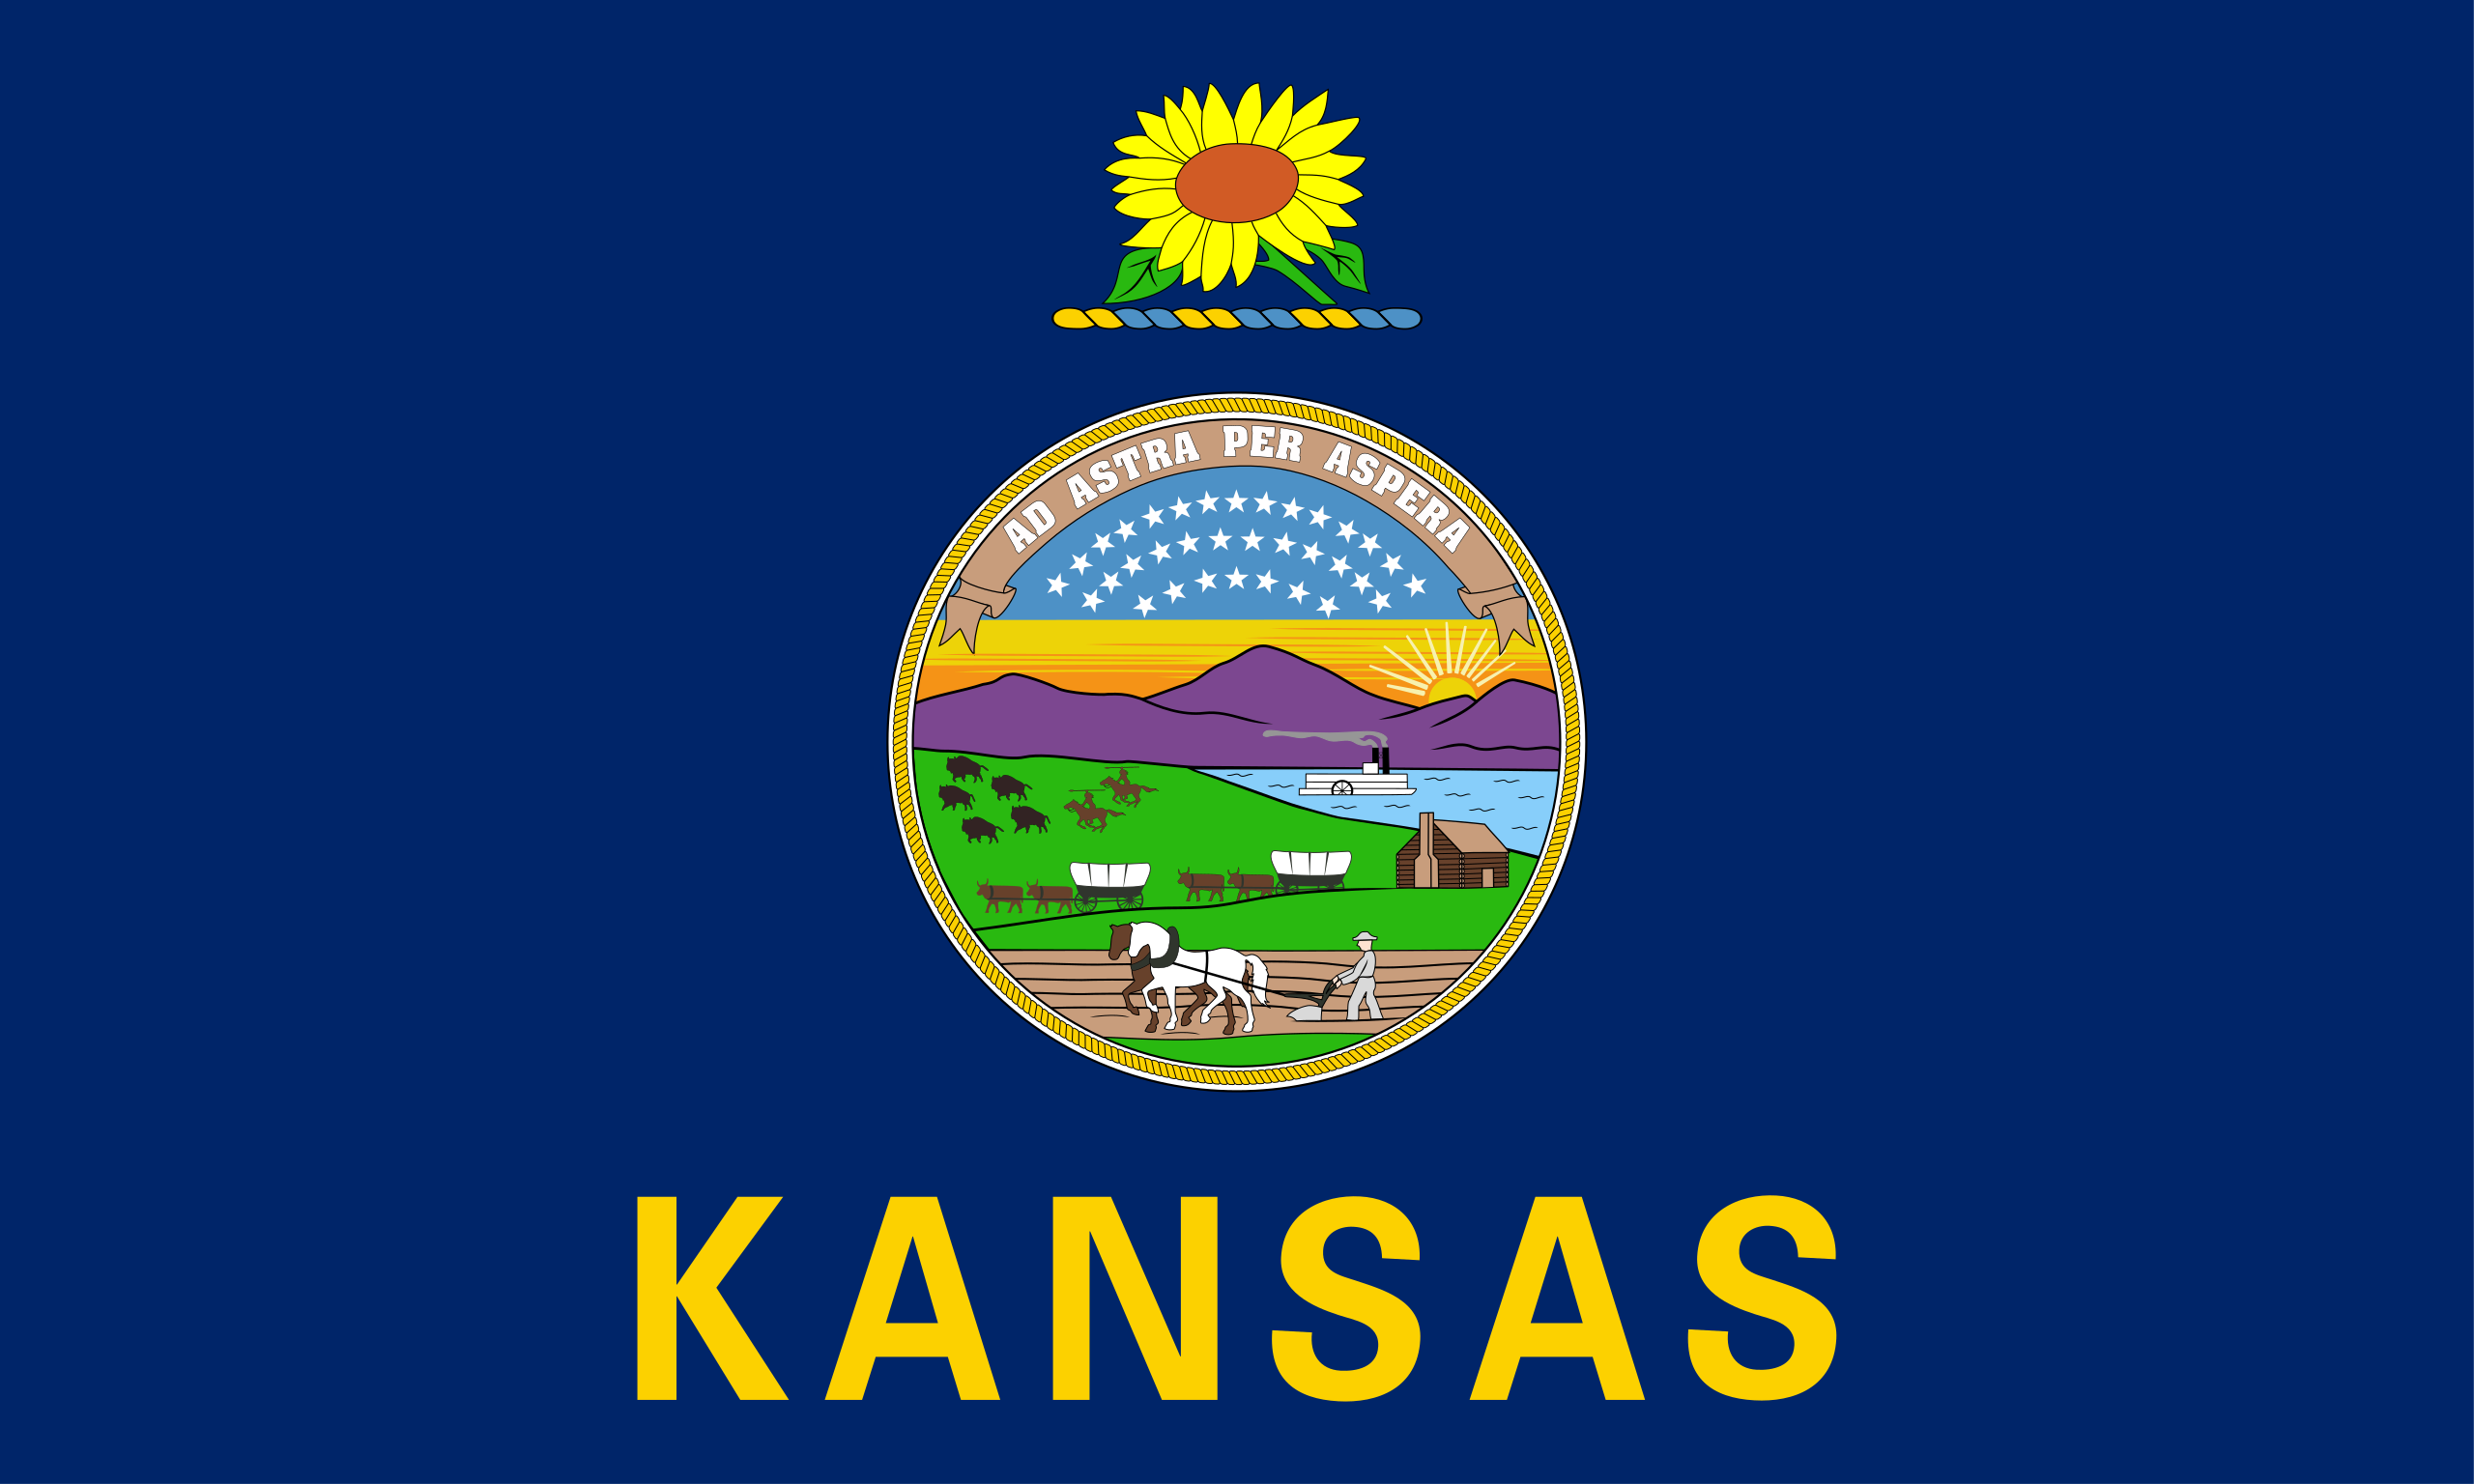 The Kansas State Flag